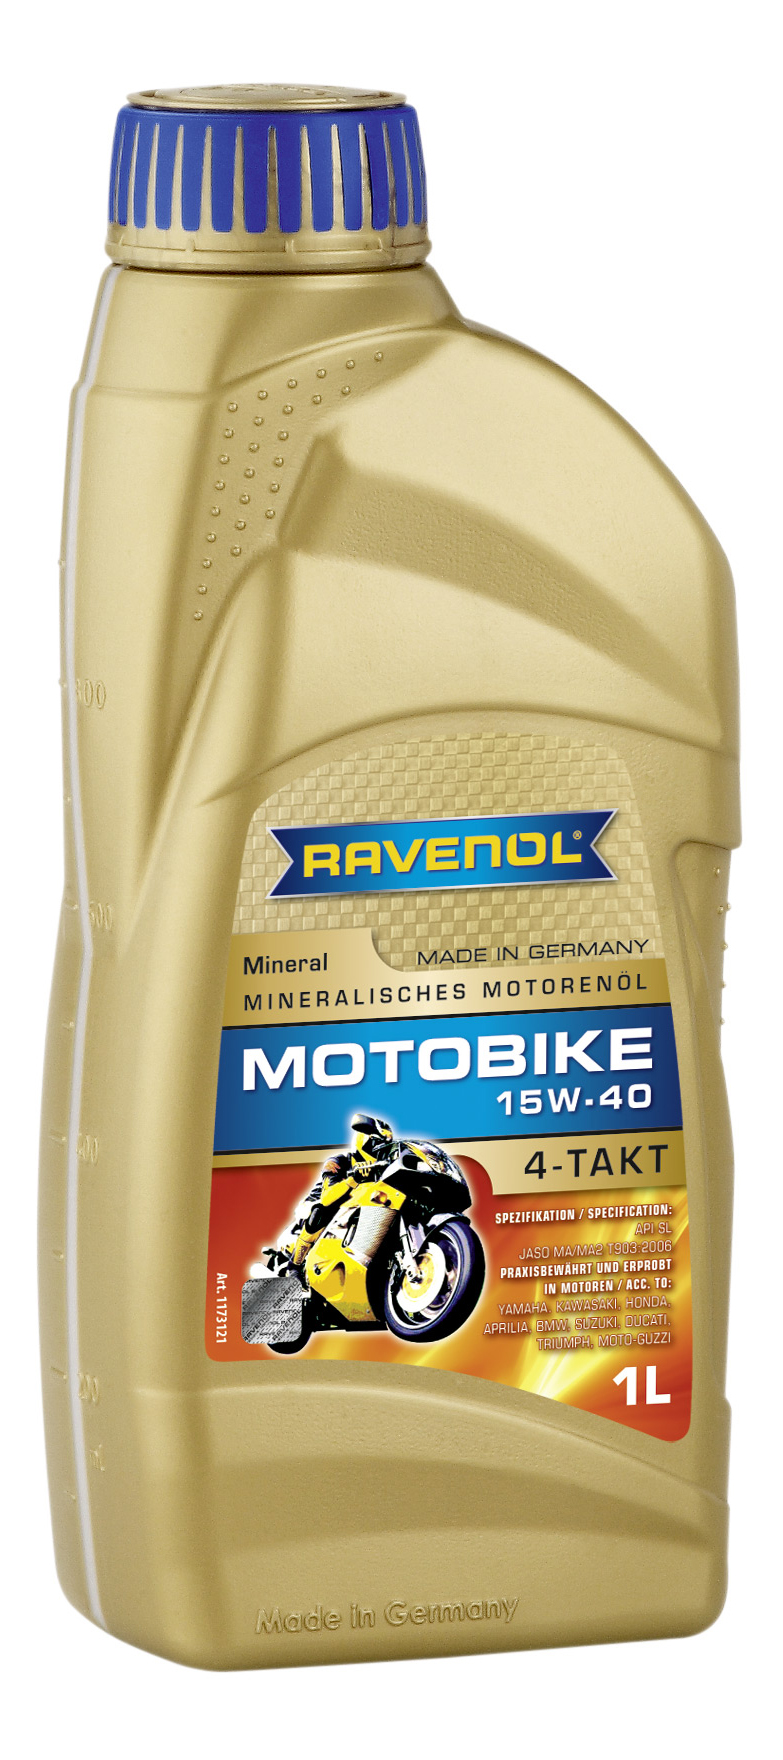 Моторное масло RAVENOL Motobike 4-T Mineral SAE 15W-40 (1л) new 4014835731318